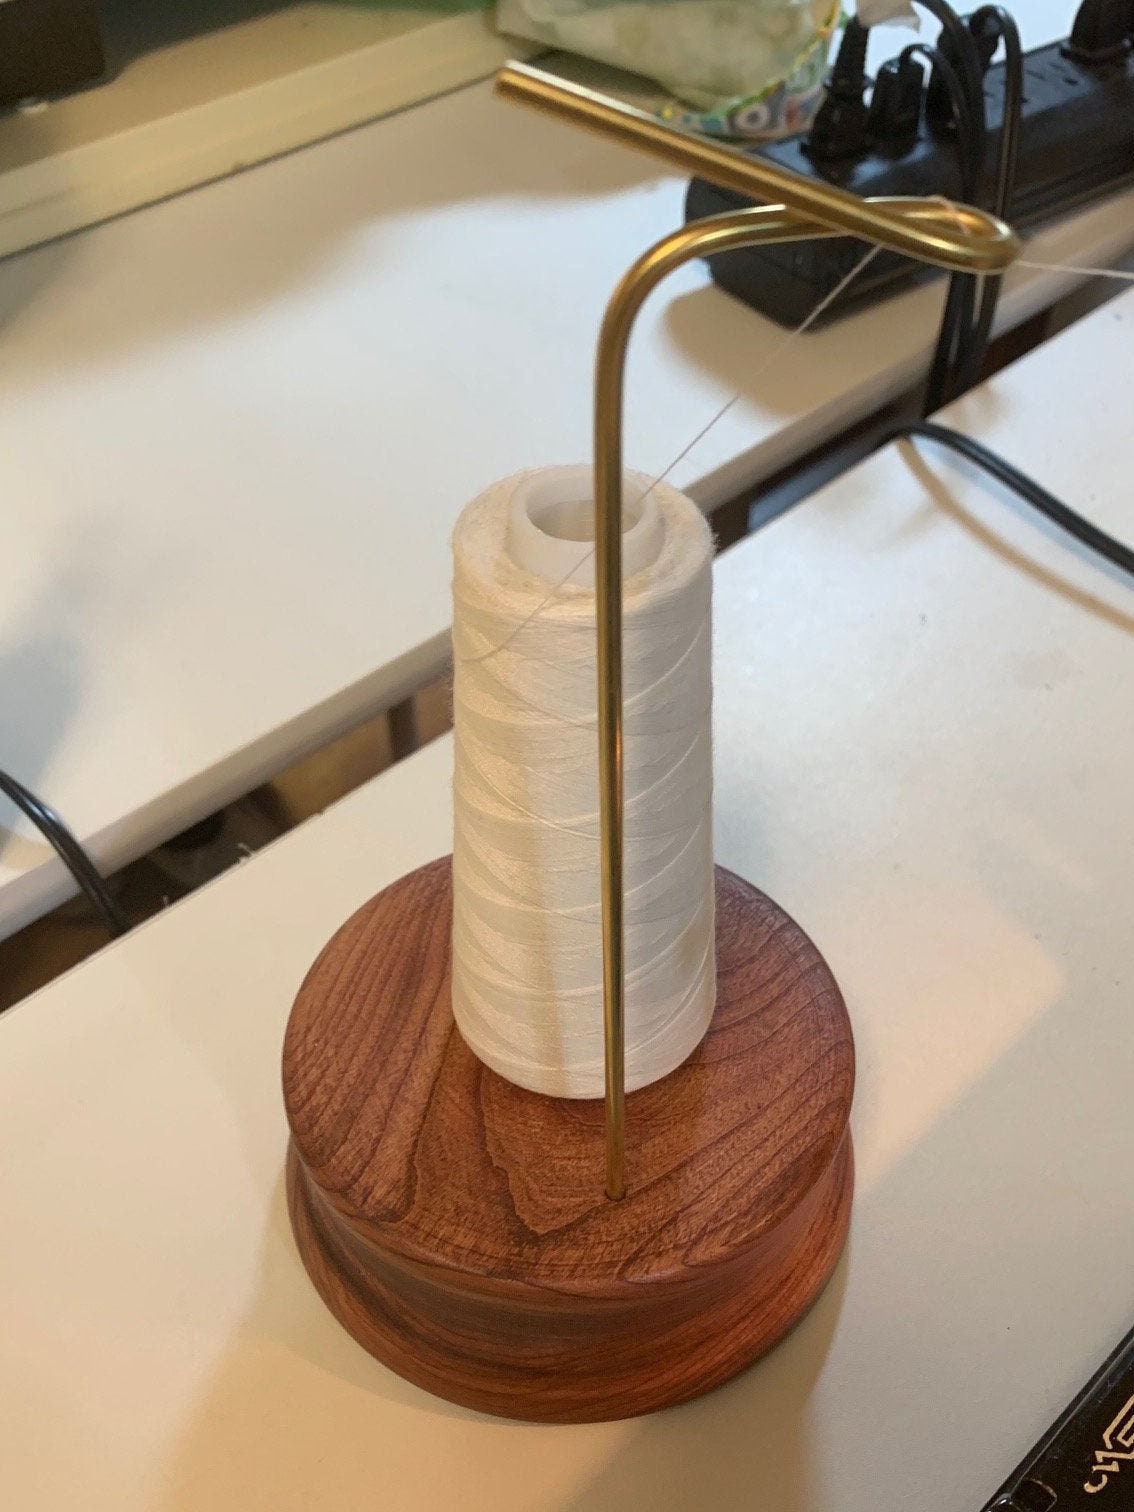 Thread holder for cone thread